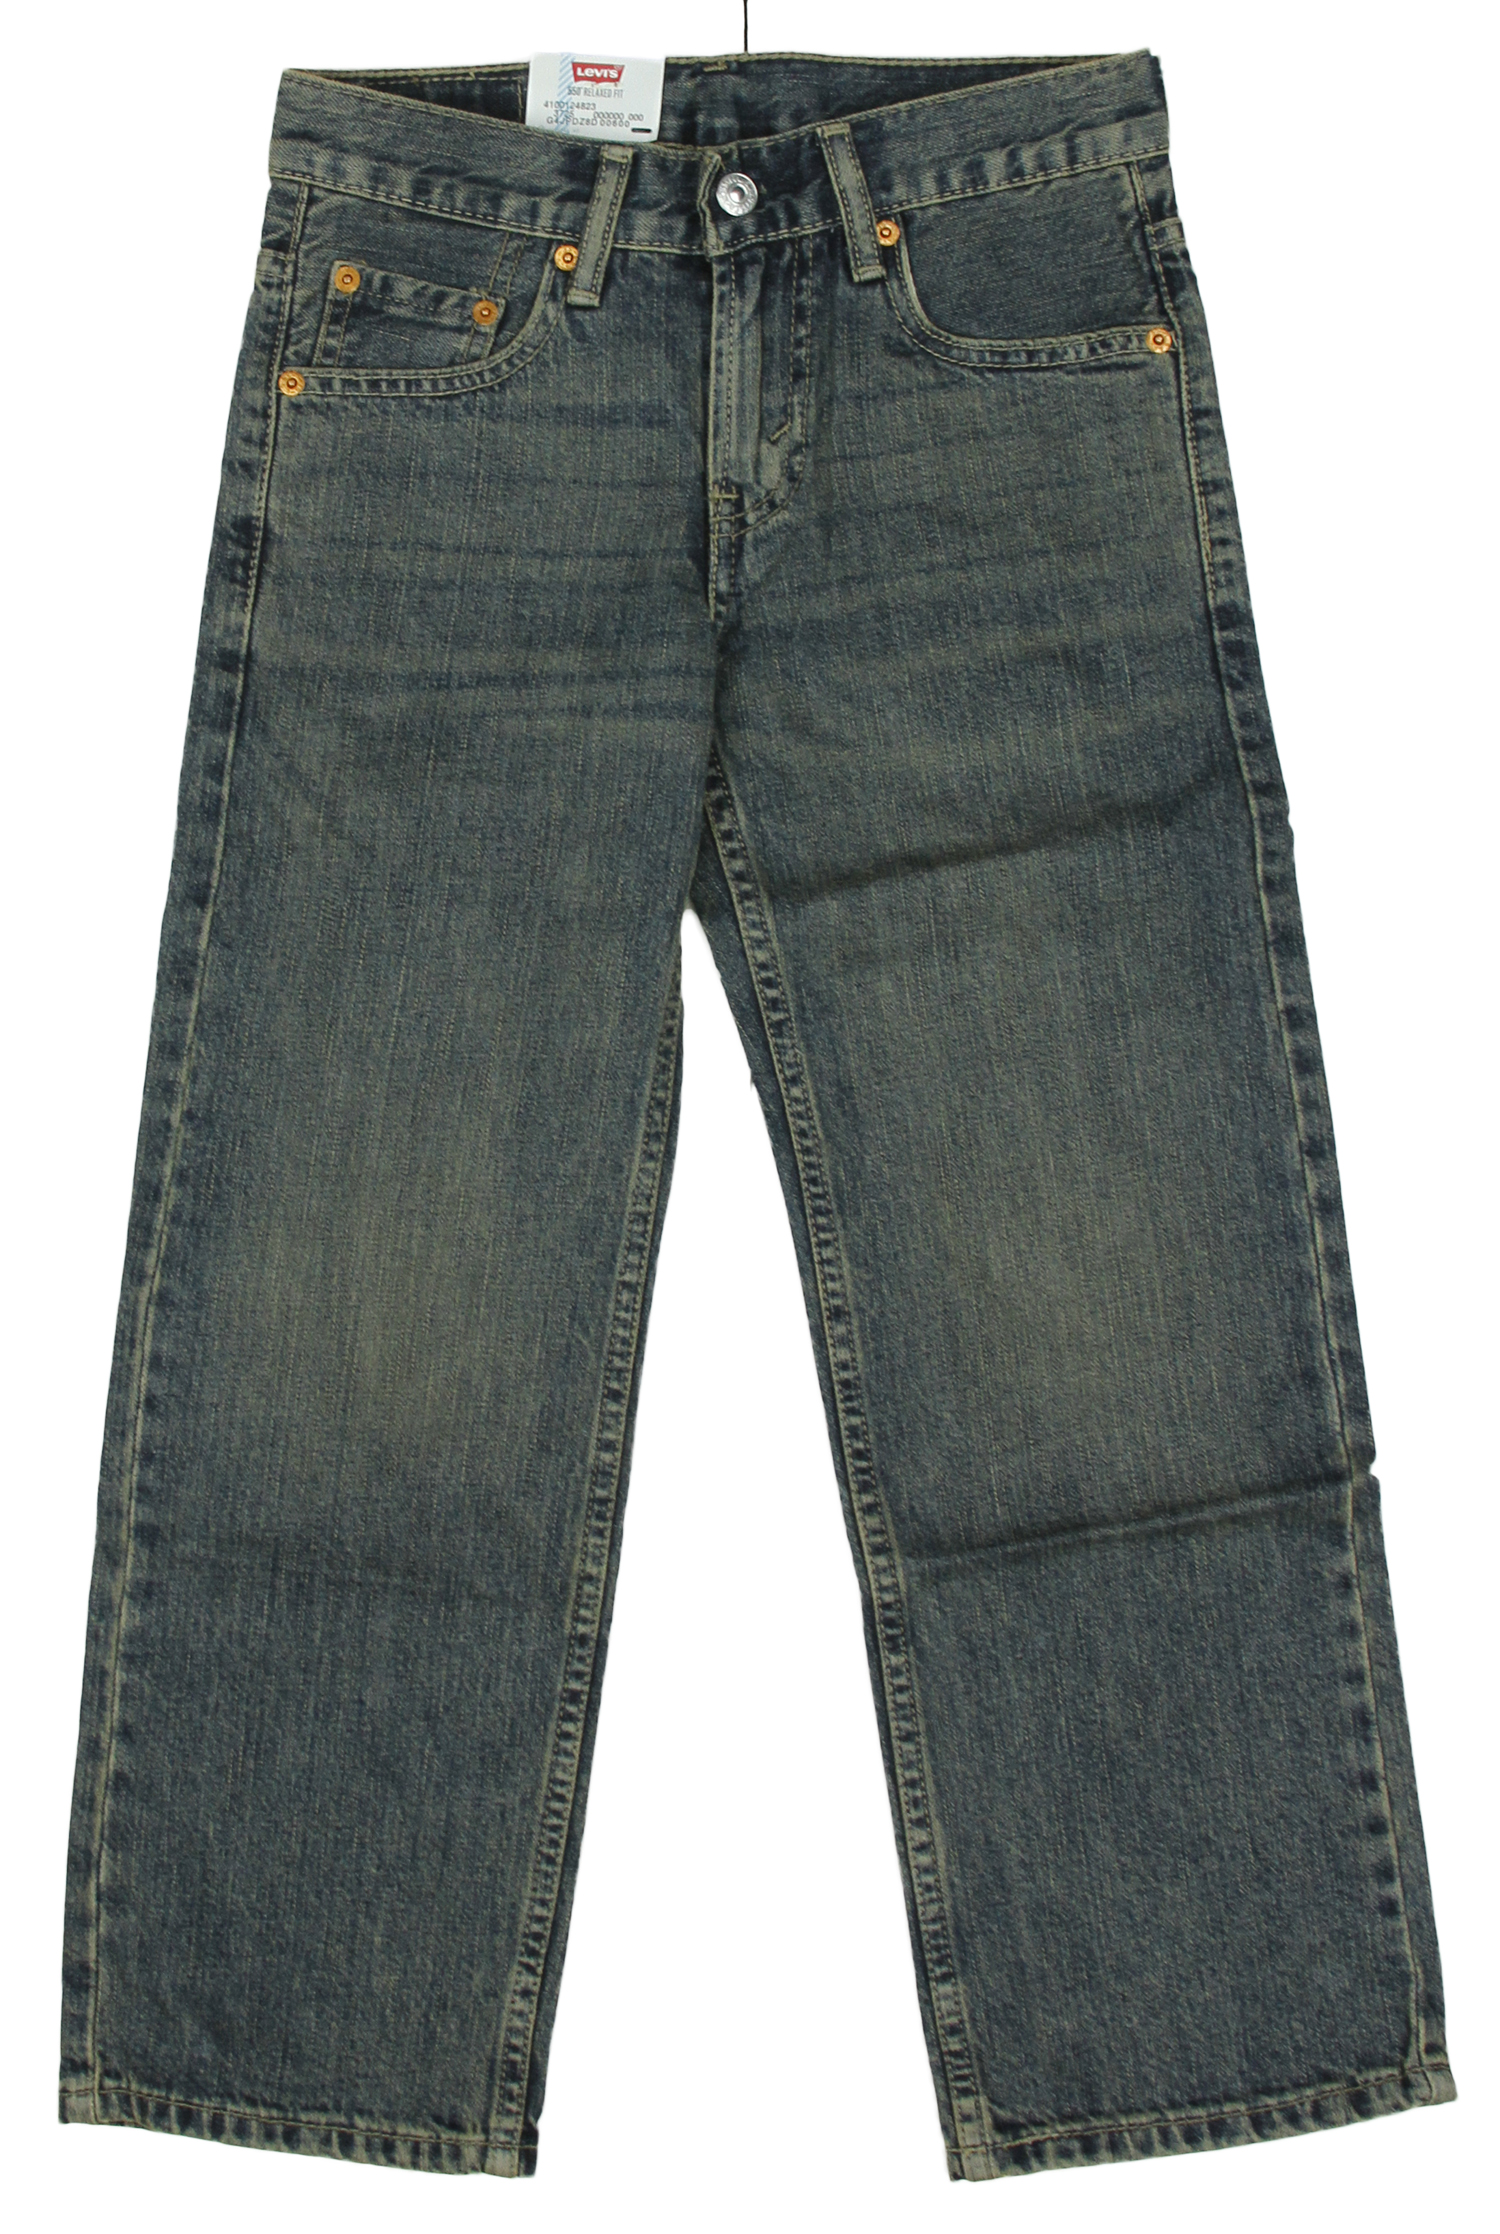 Levi's Youth Boys 550-3725 Relaxed Fit Regular Jeans Denim - Blue | eBay